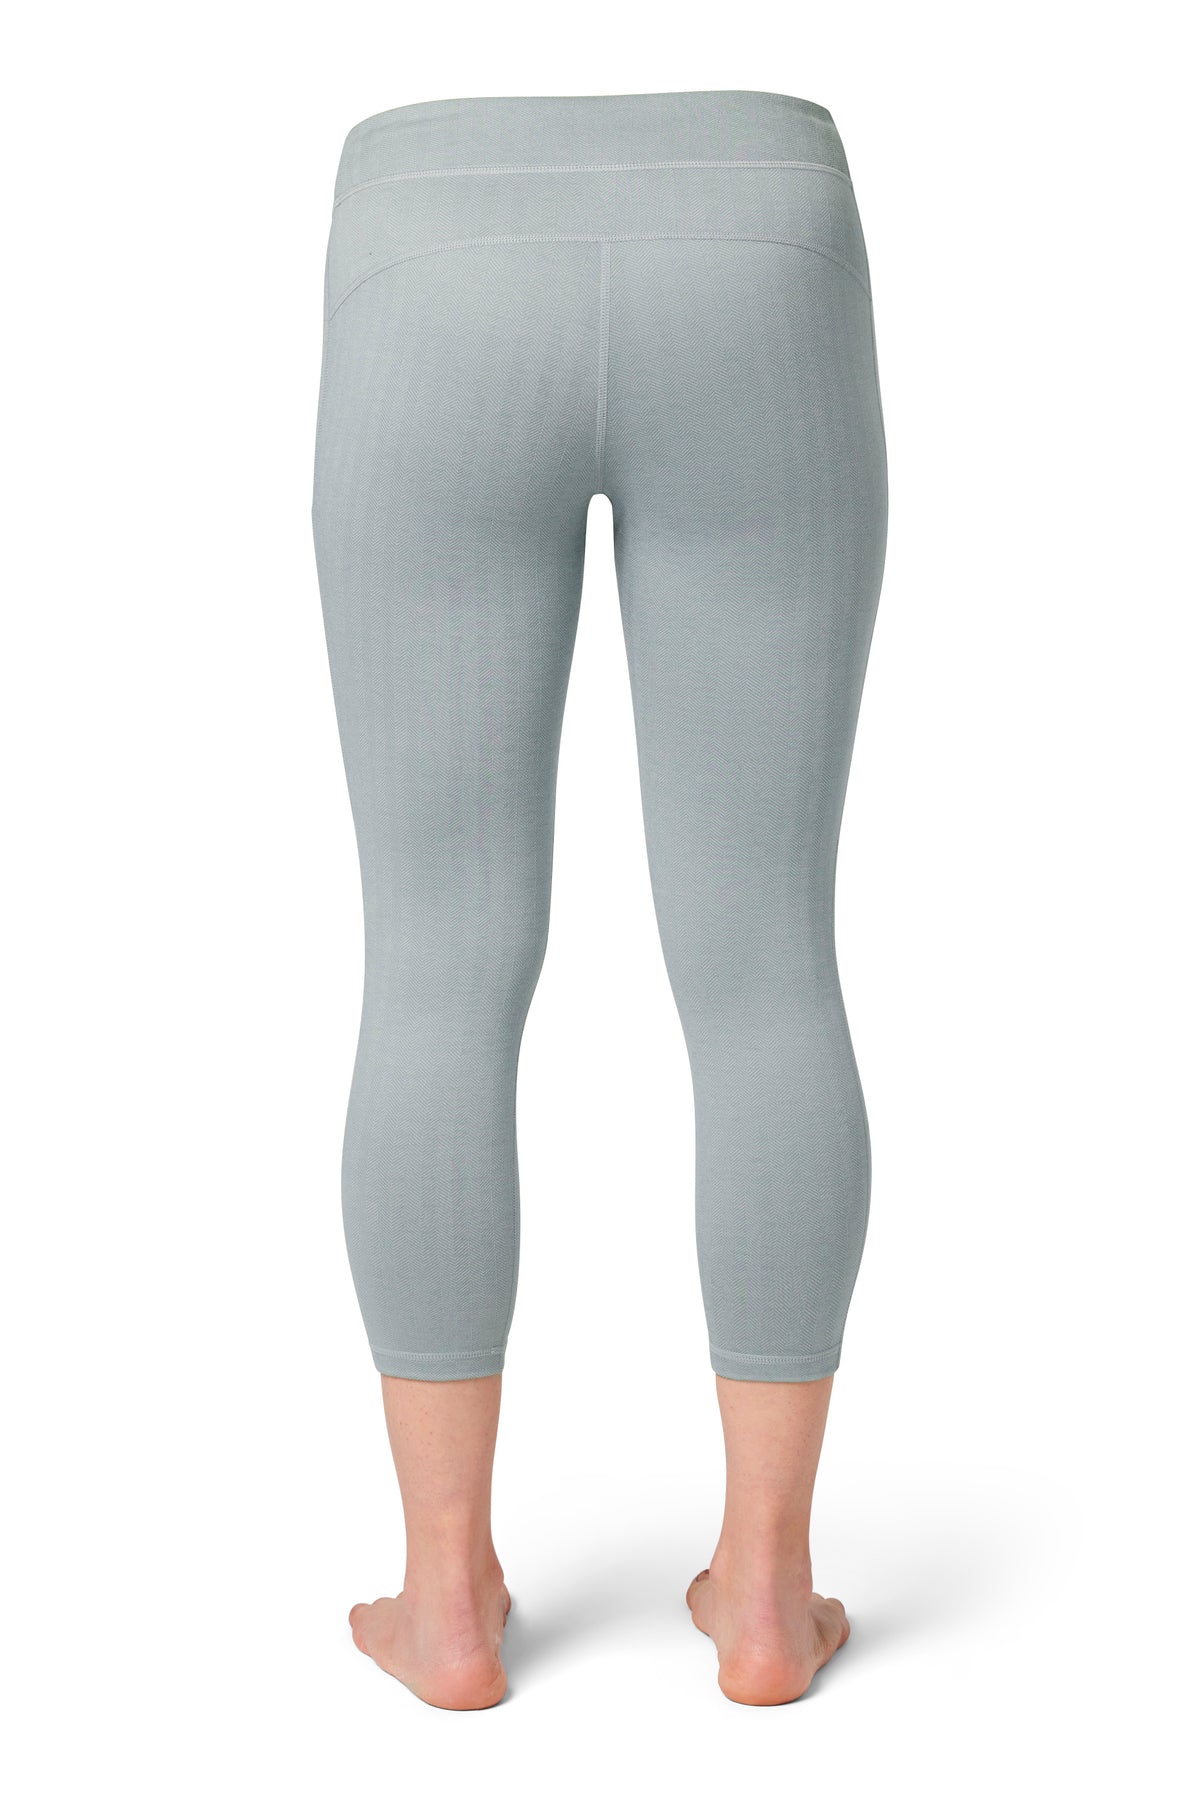 Buy the Lululemon Women's Athletica Breathable Gray Leggings Size